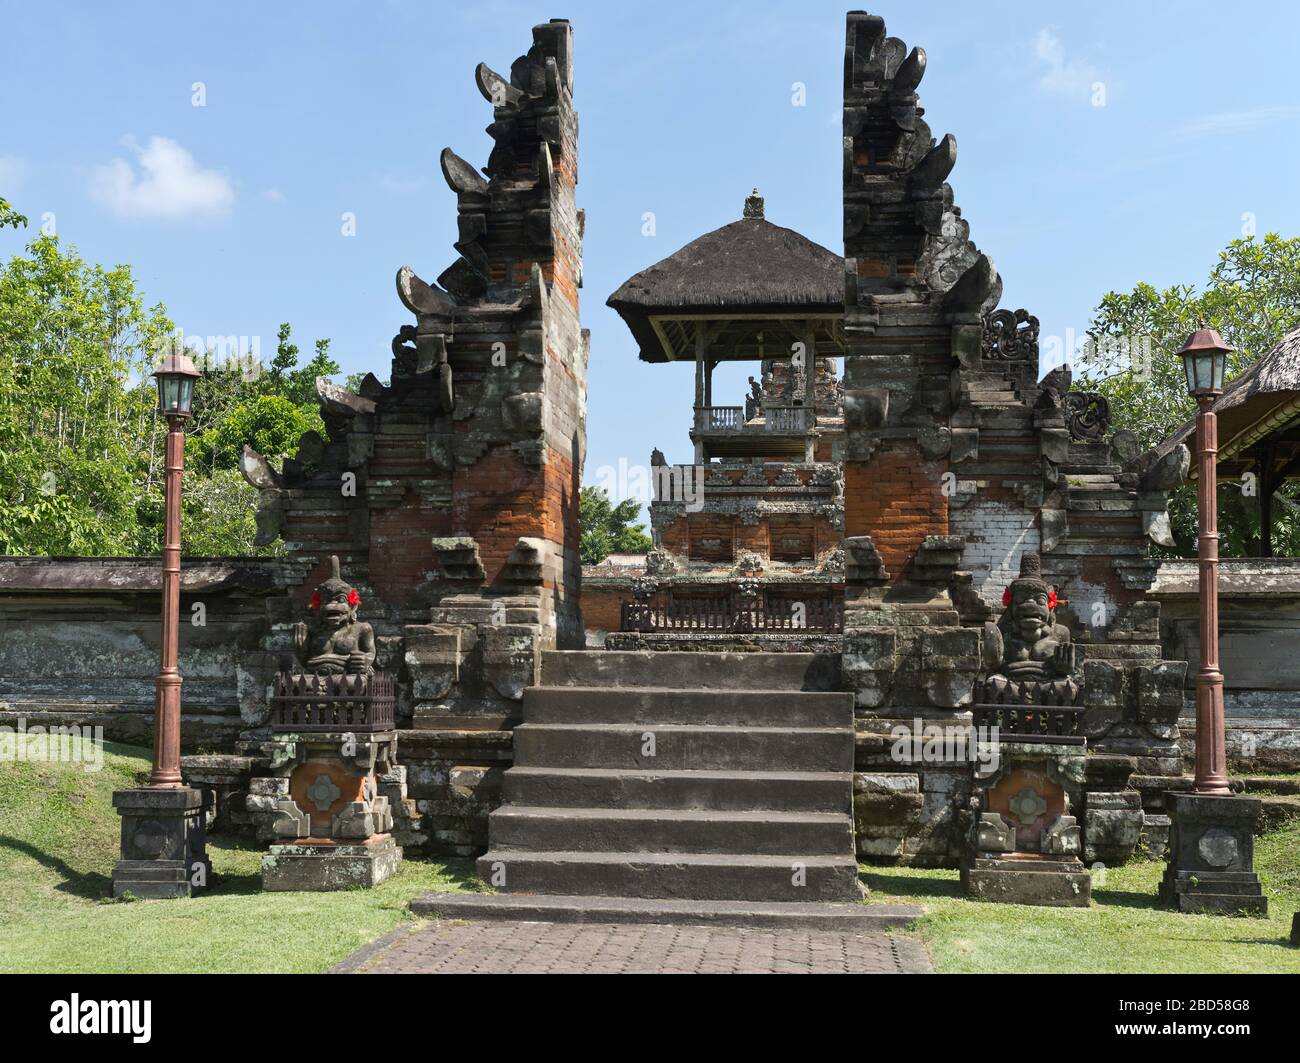 dh Pura Taman Ayun Royal Temple BALI INDONESIA Balinese Hindu Mengwi temples garden gate entrance architecture hinduism Stock Photo